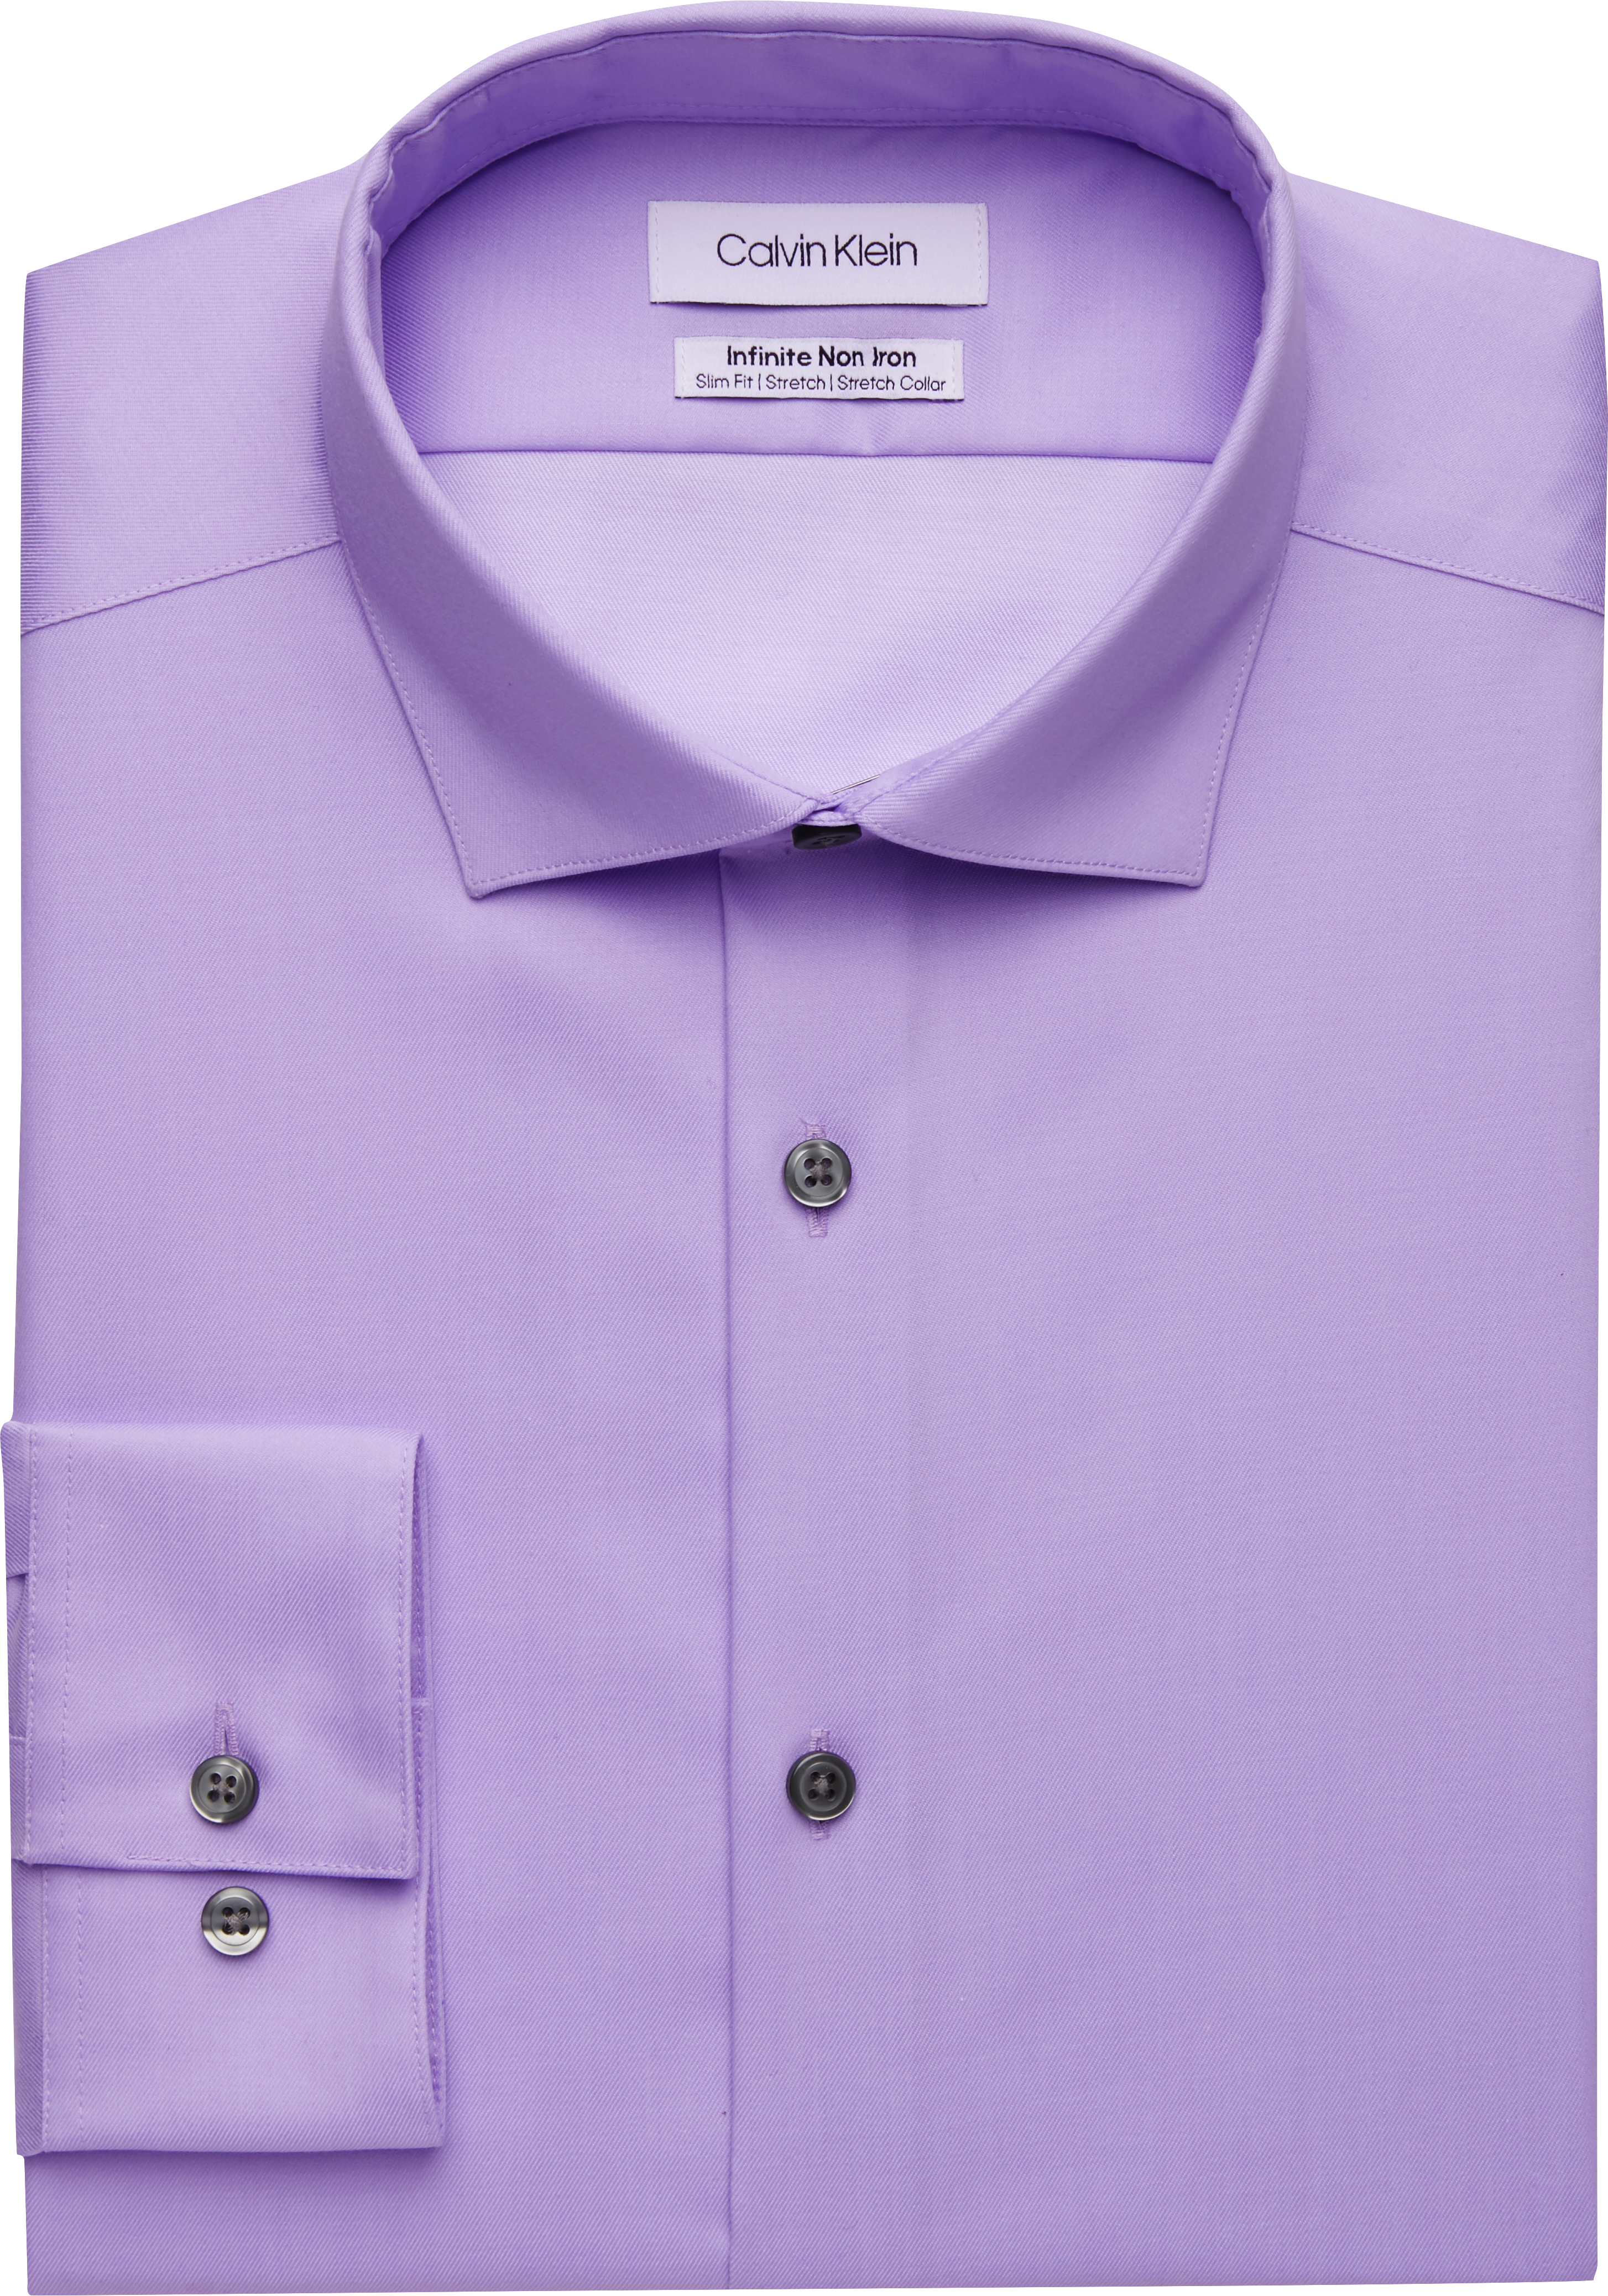 Calvin Klein Infinite Non-Iron Slim Fit Collar Dress Shirt, Purple Men's |